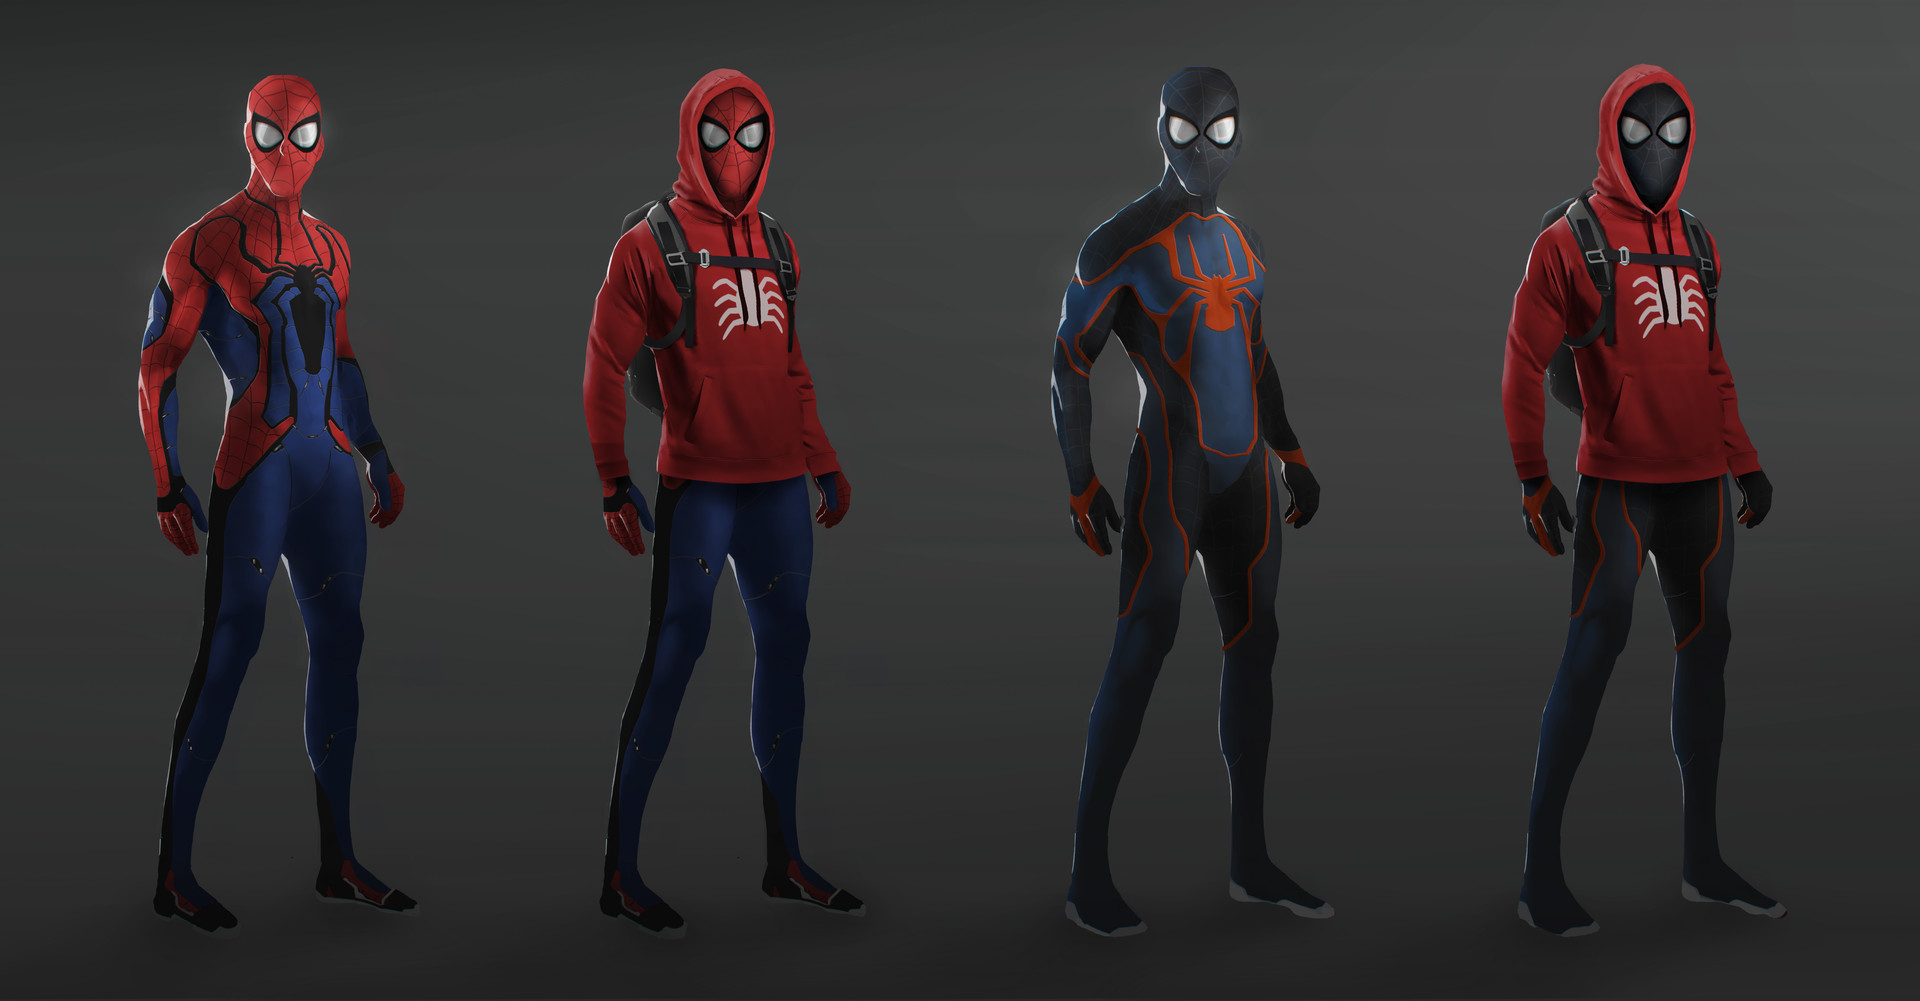 ArtStation - Spider-Man Suit Design fan art